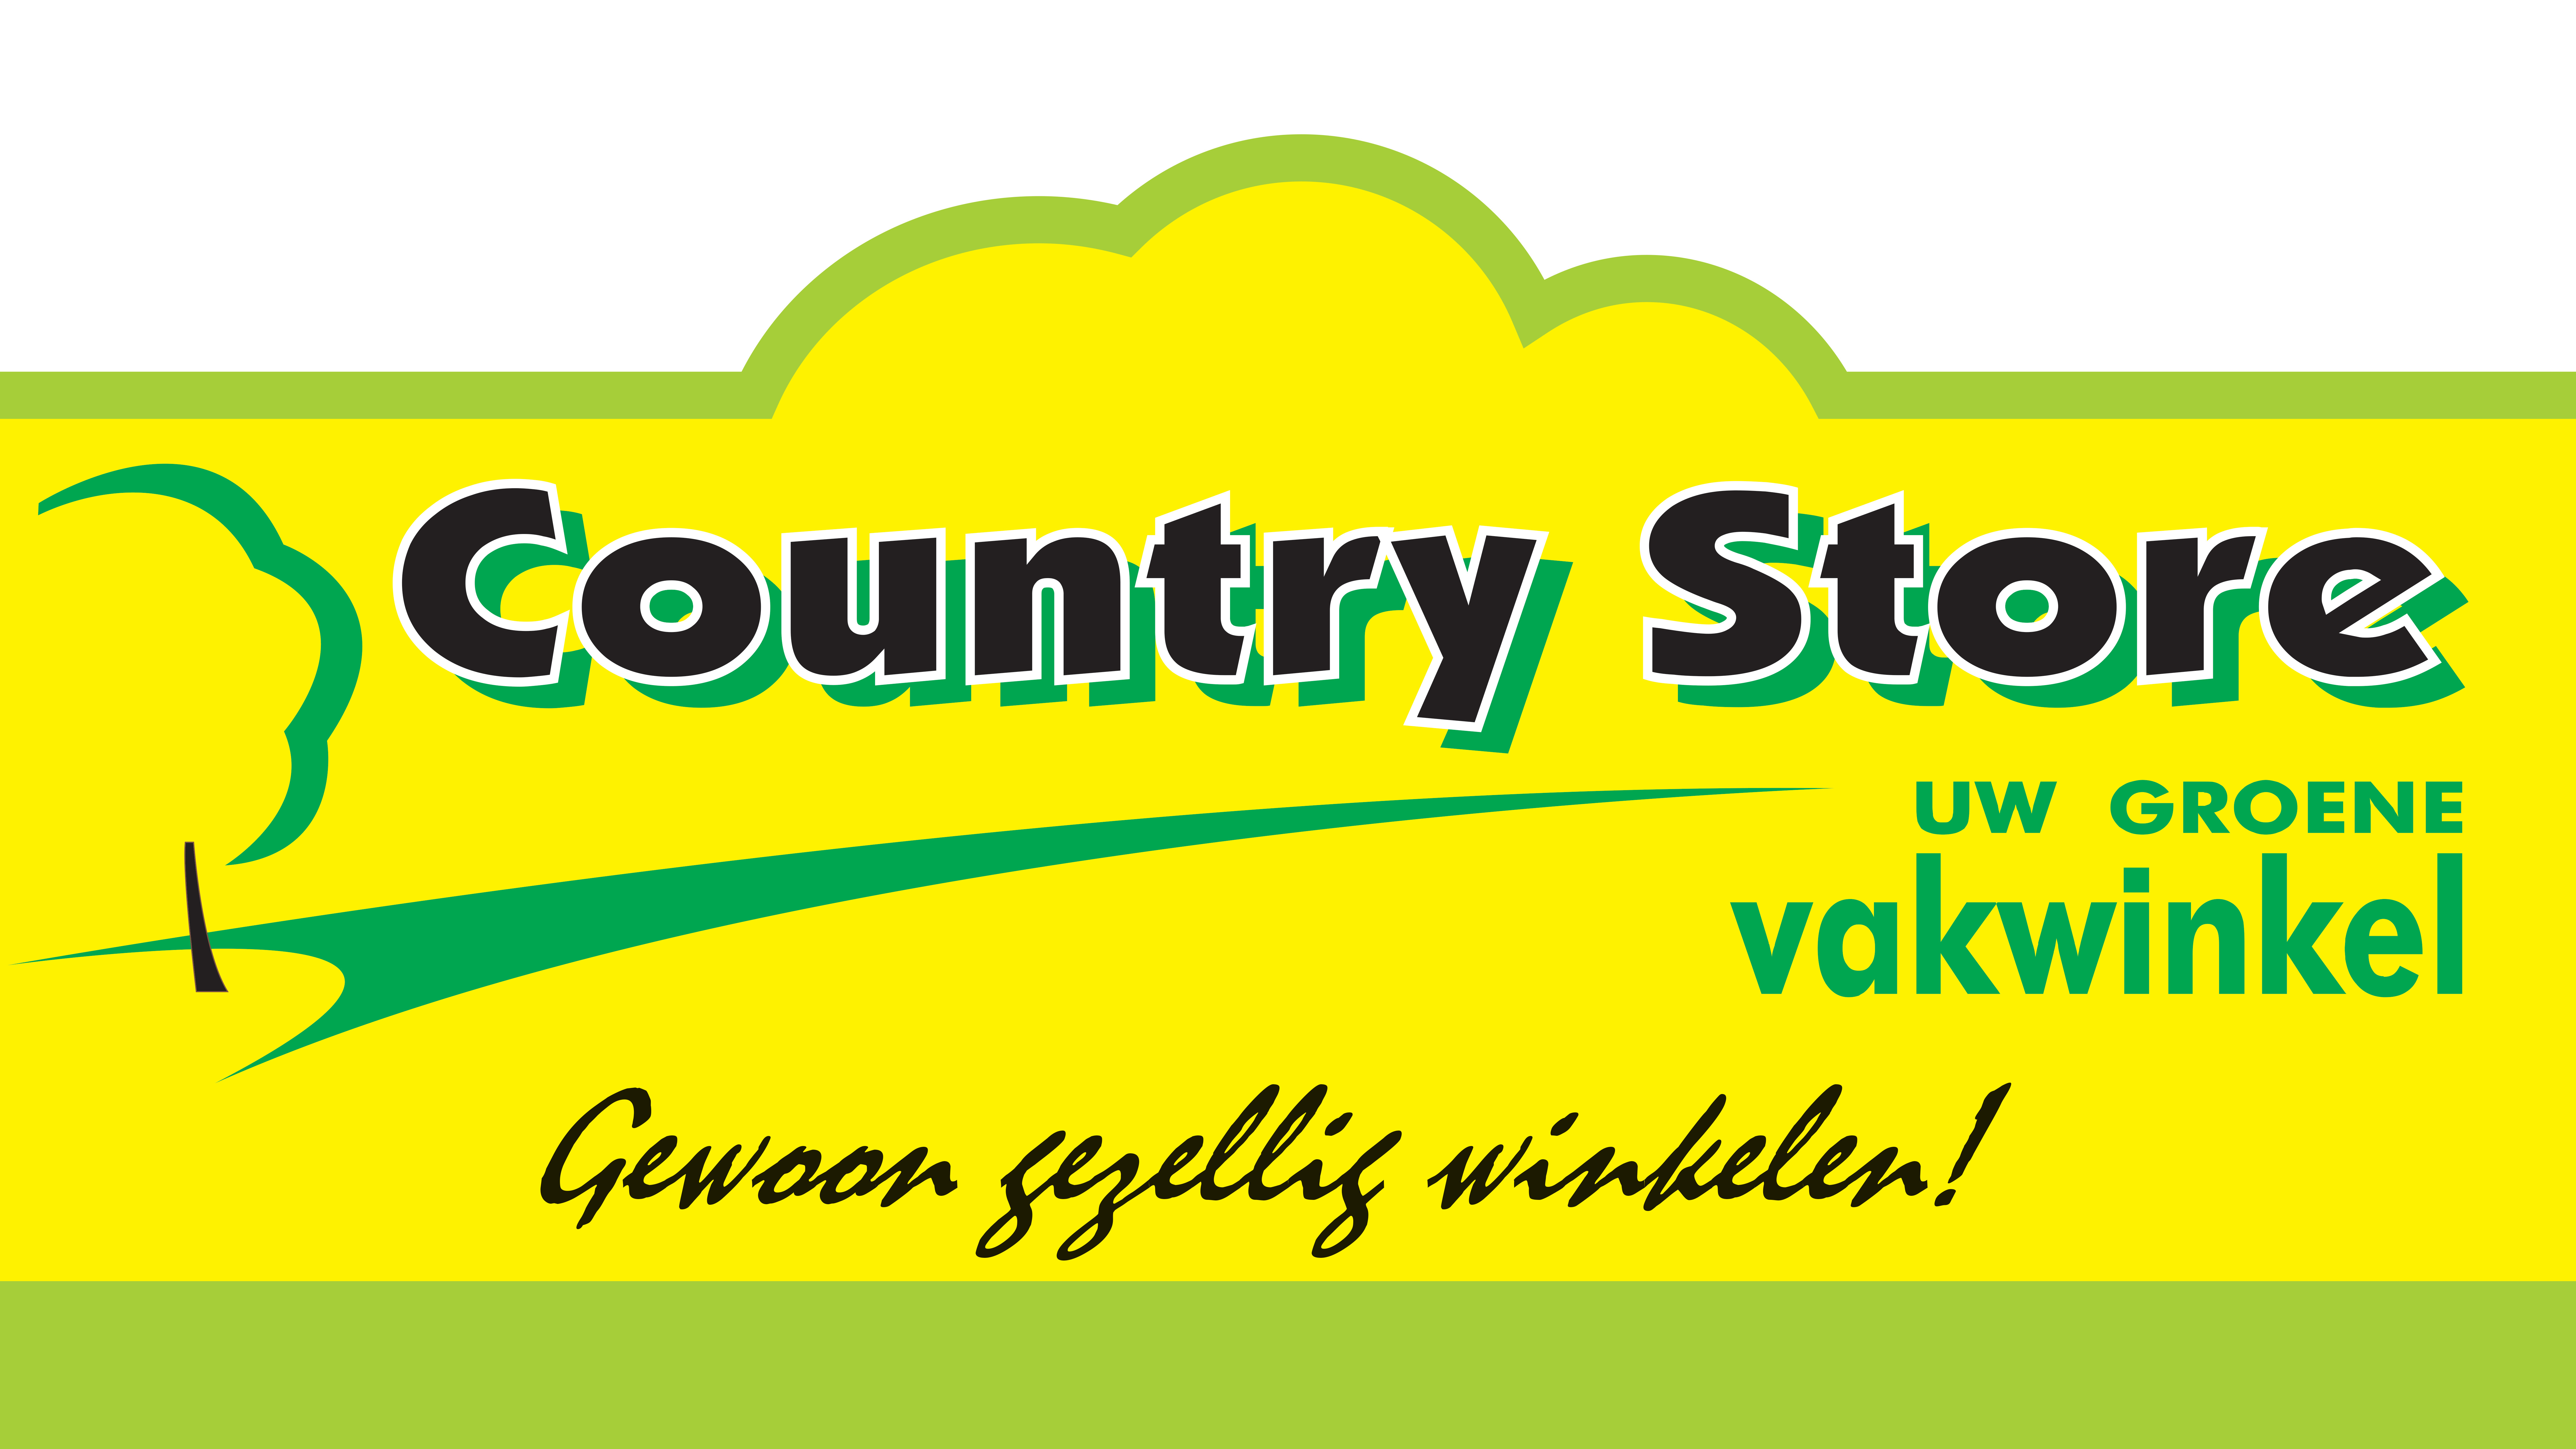 5 Countrystore logo gala gew